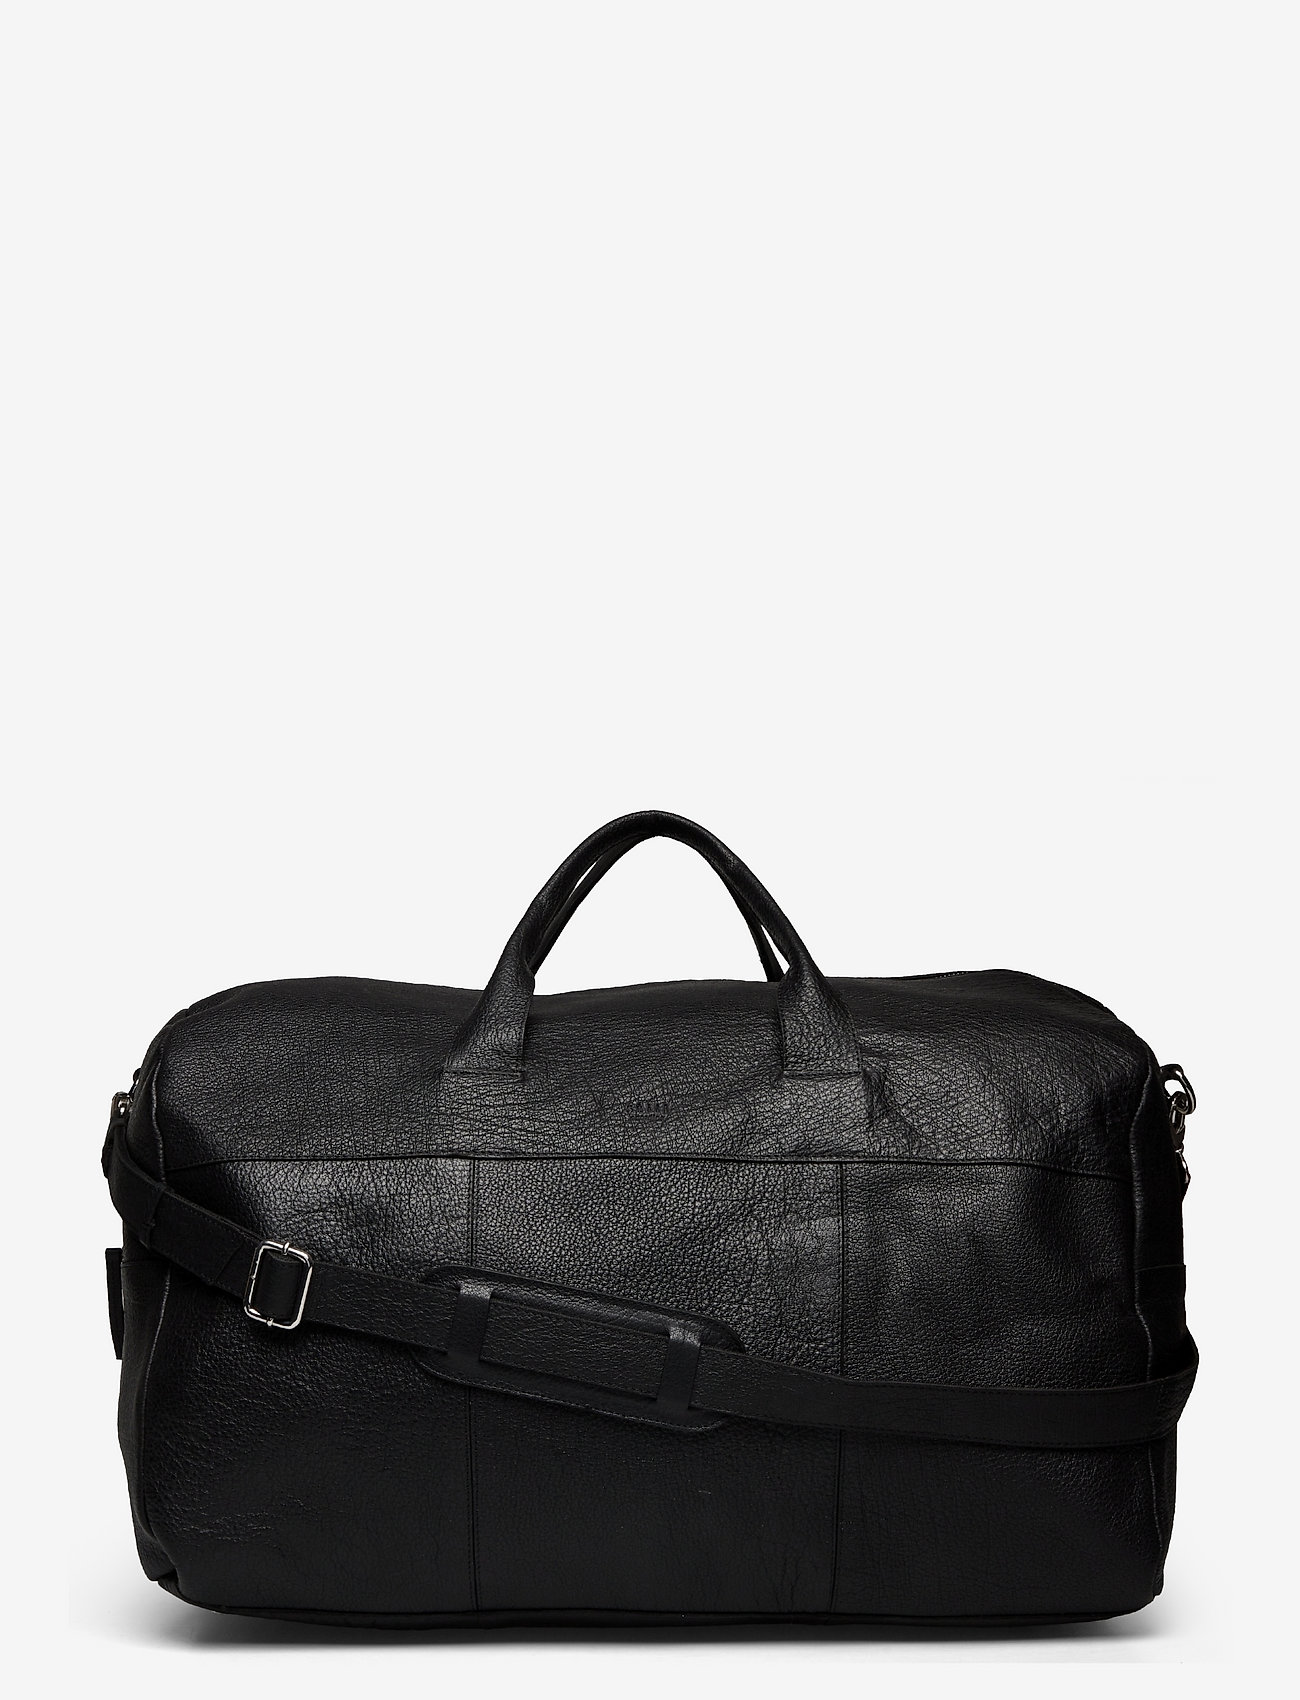 Still Nordic - stillRichard Travel Bag - weekend bags - black - 0